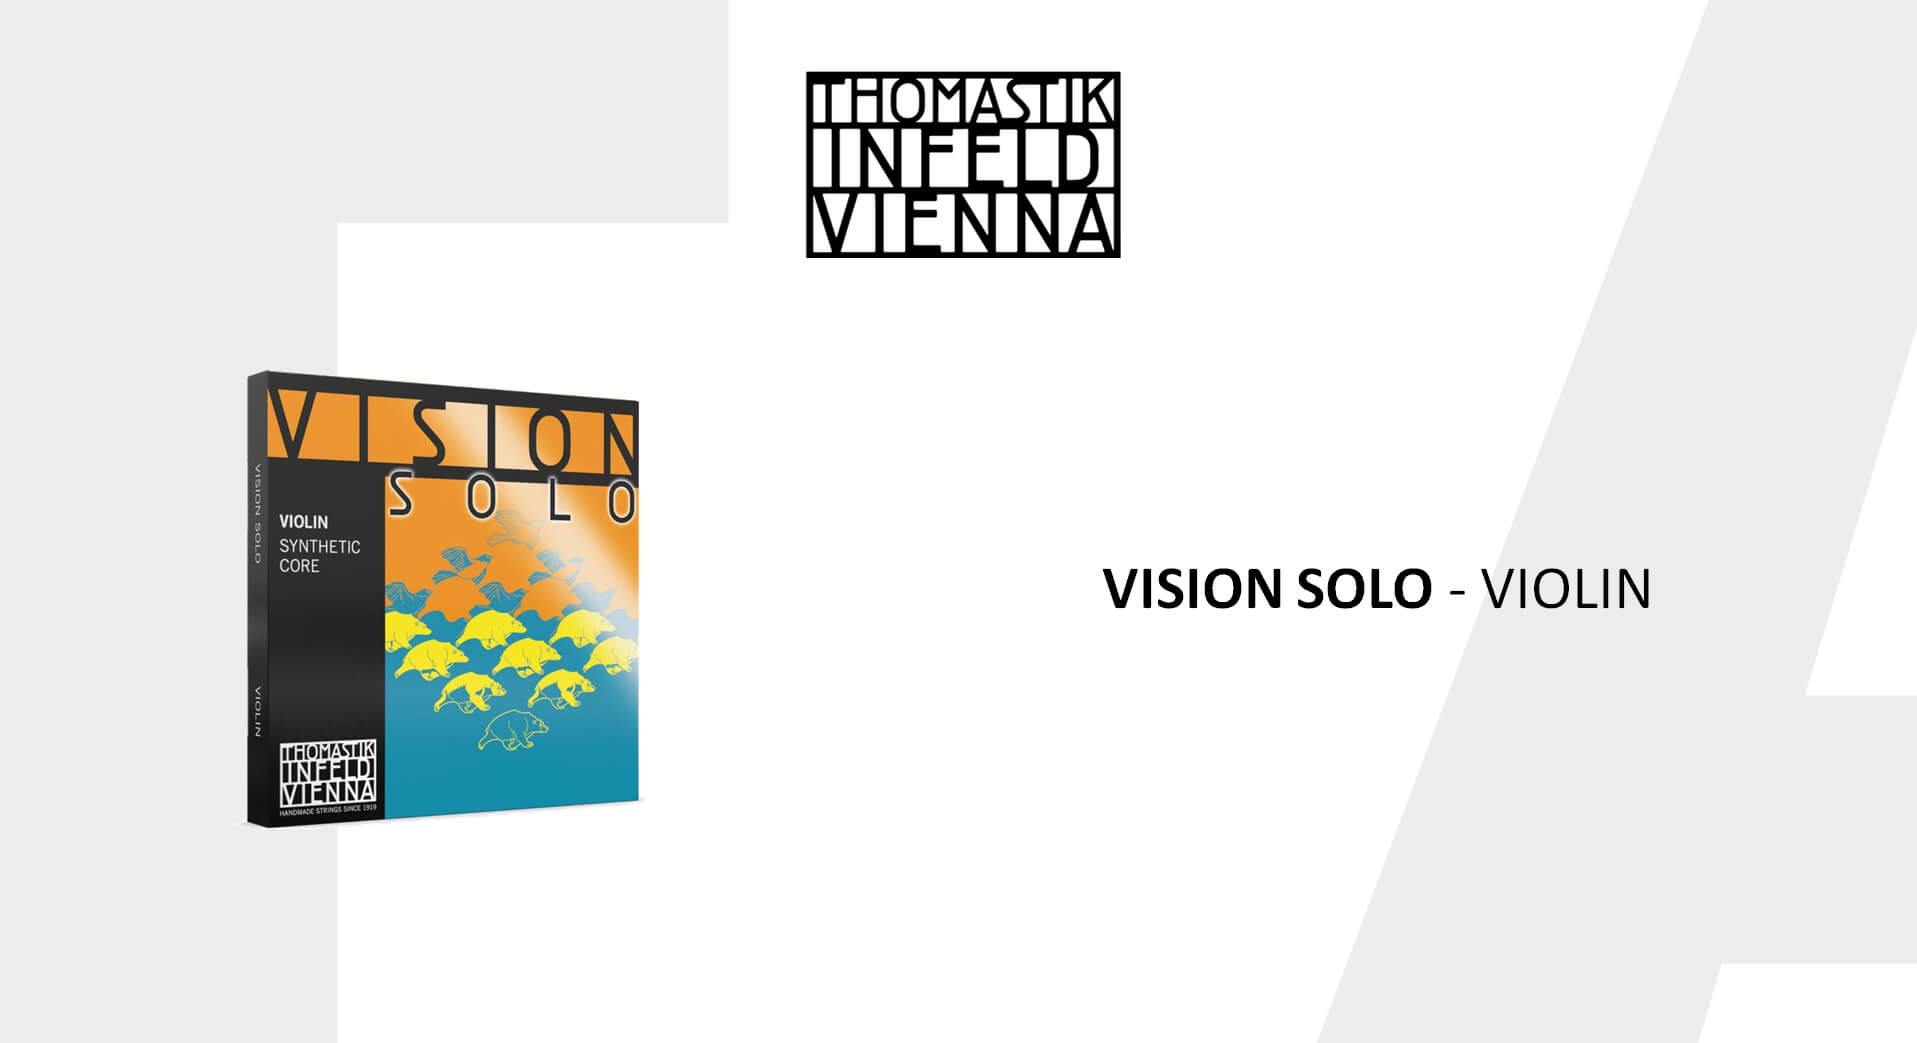 THOMASTIK VISION-SOLO 小提琴絃(VIS100,套)